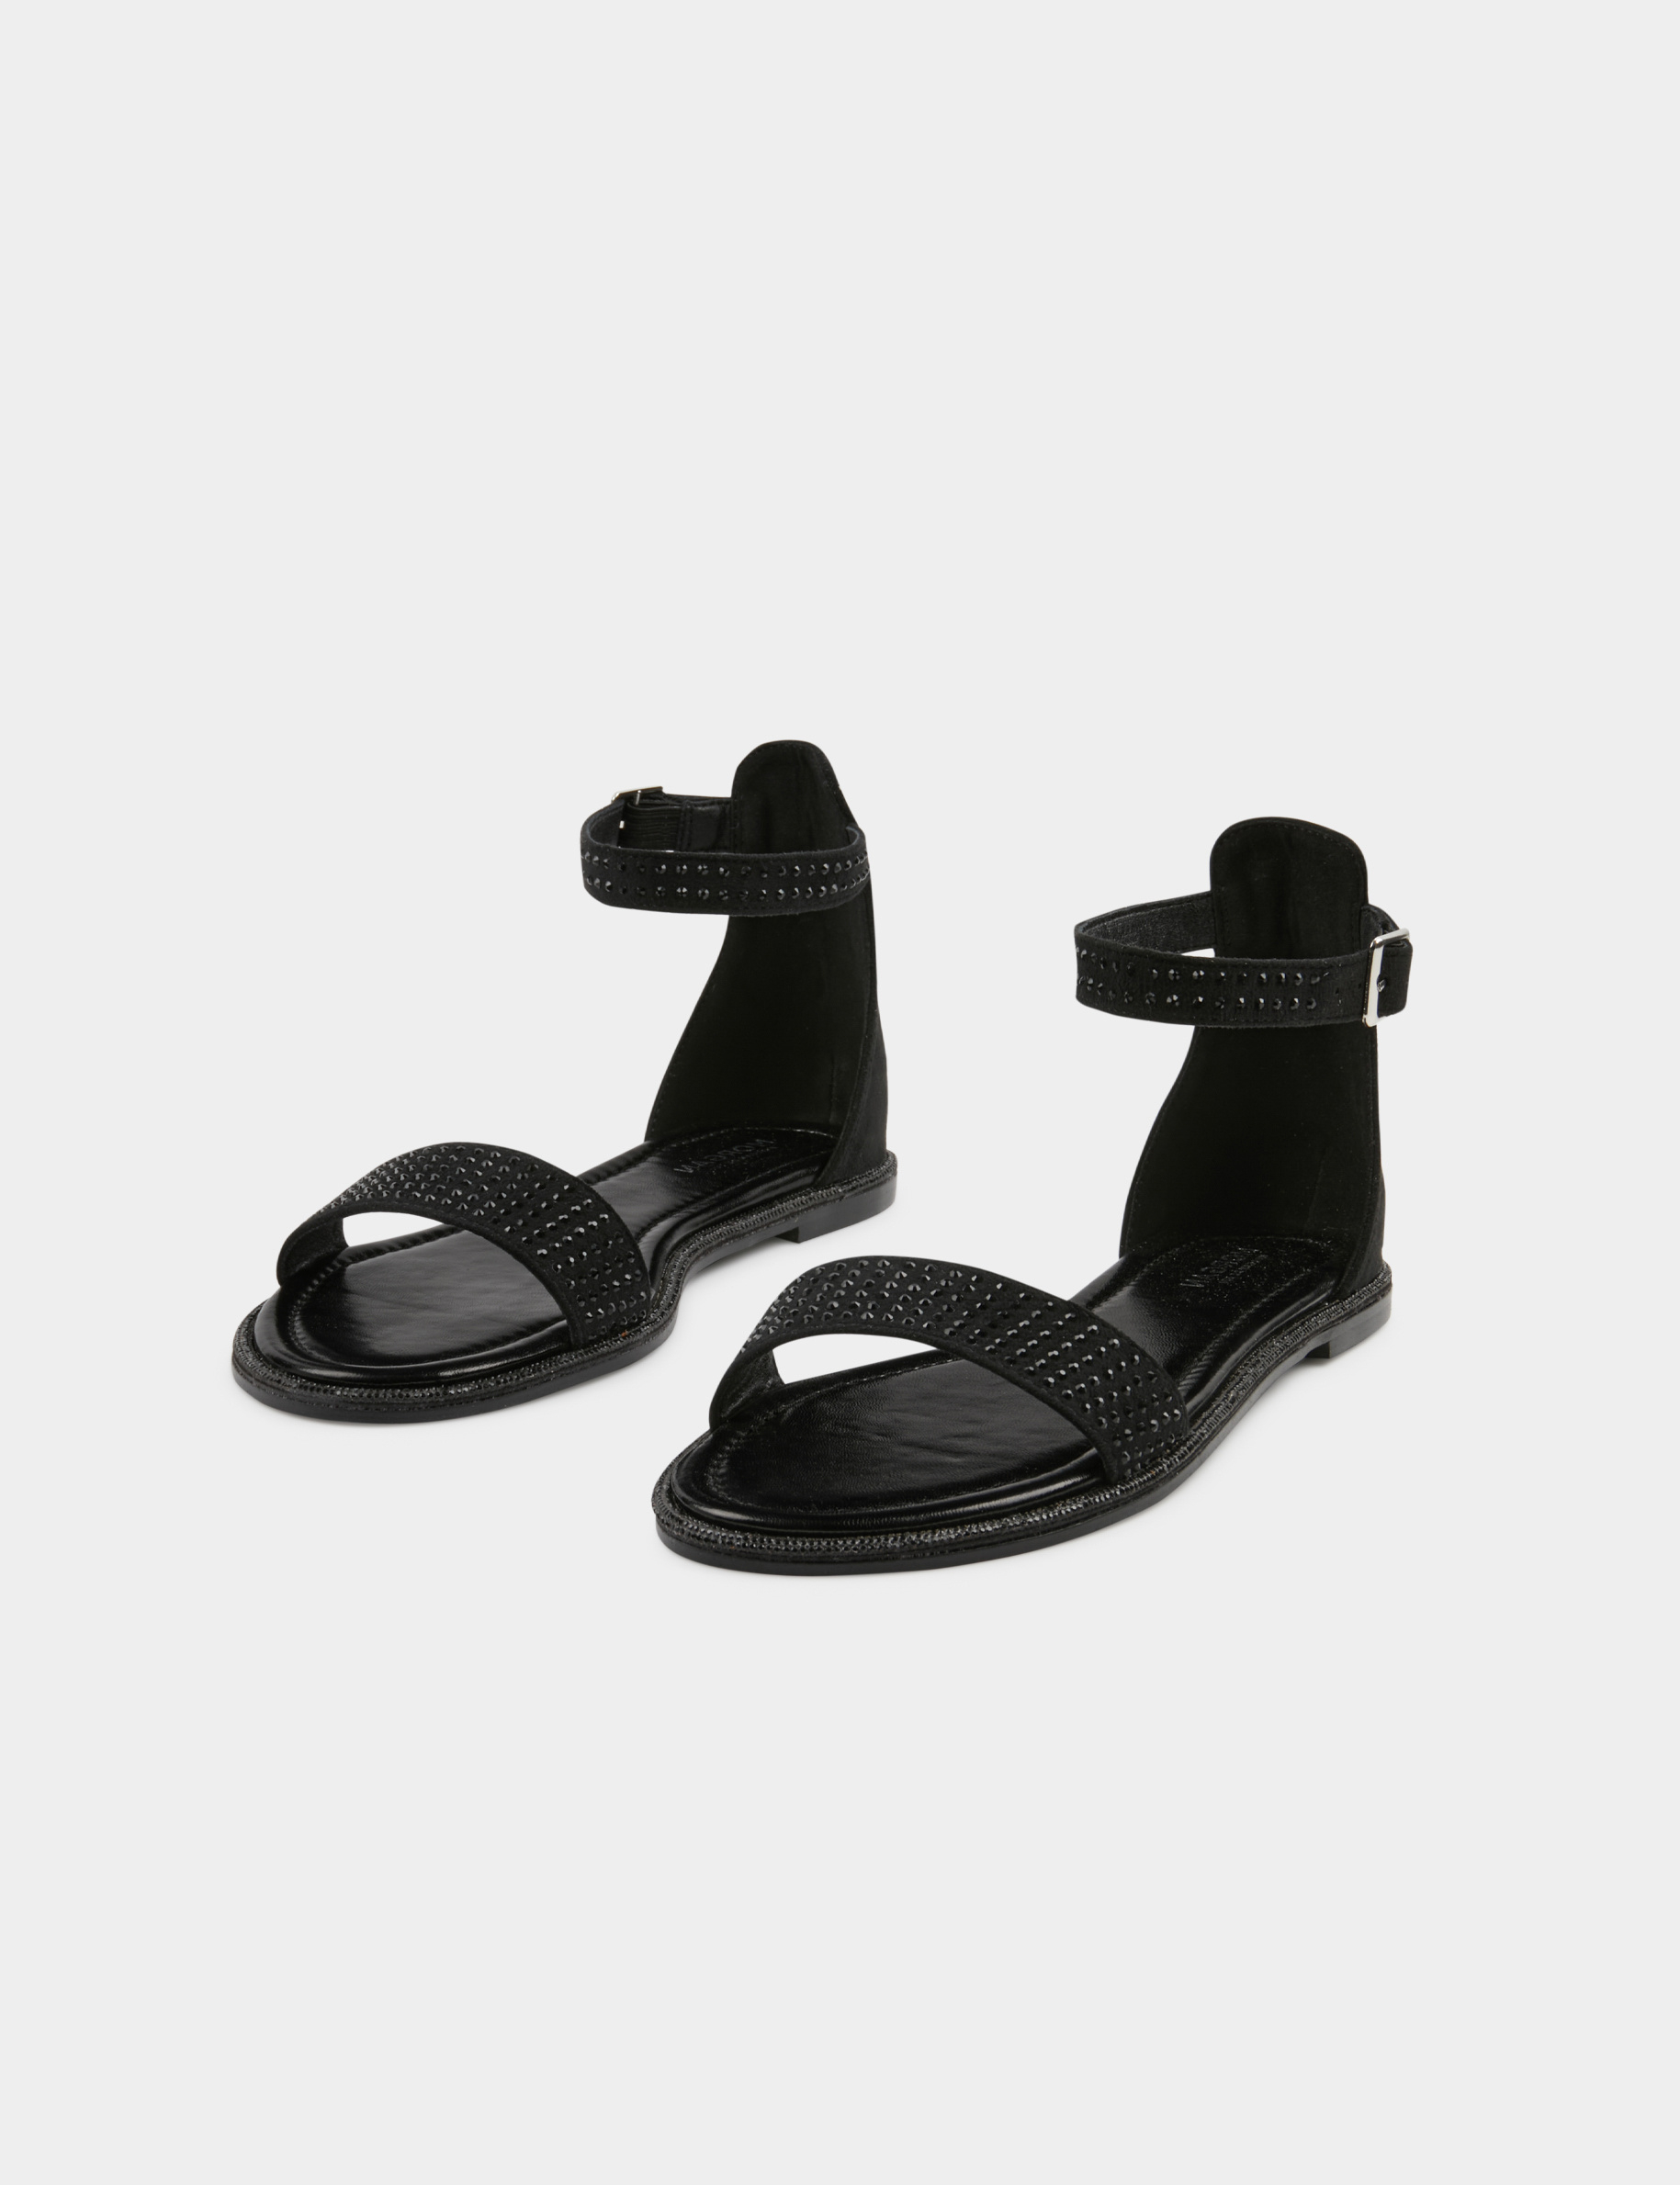 Flat sandals with rhinestones details black ladies'